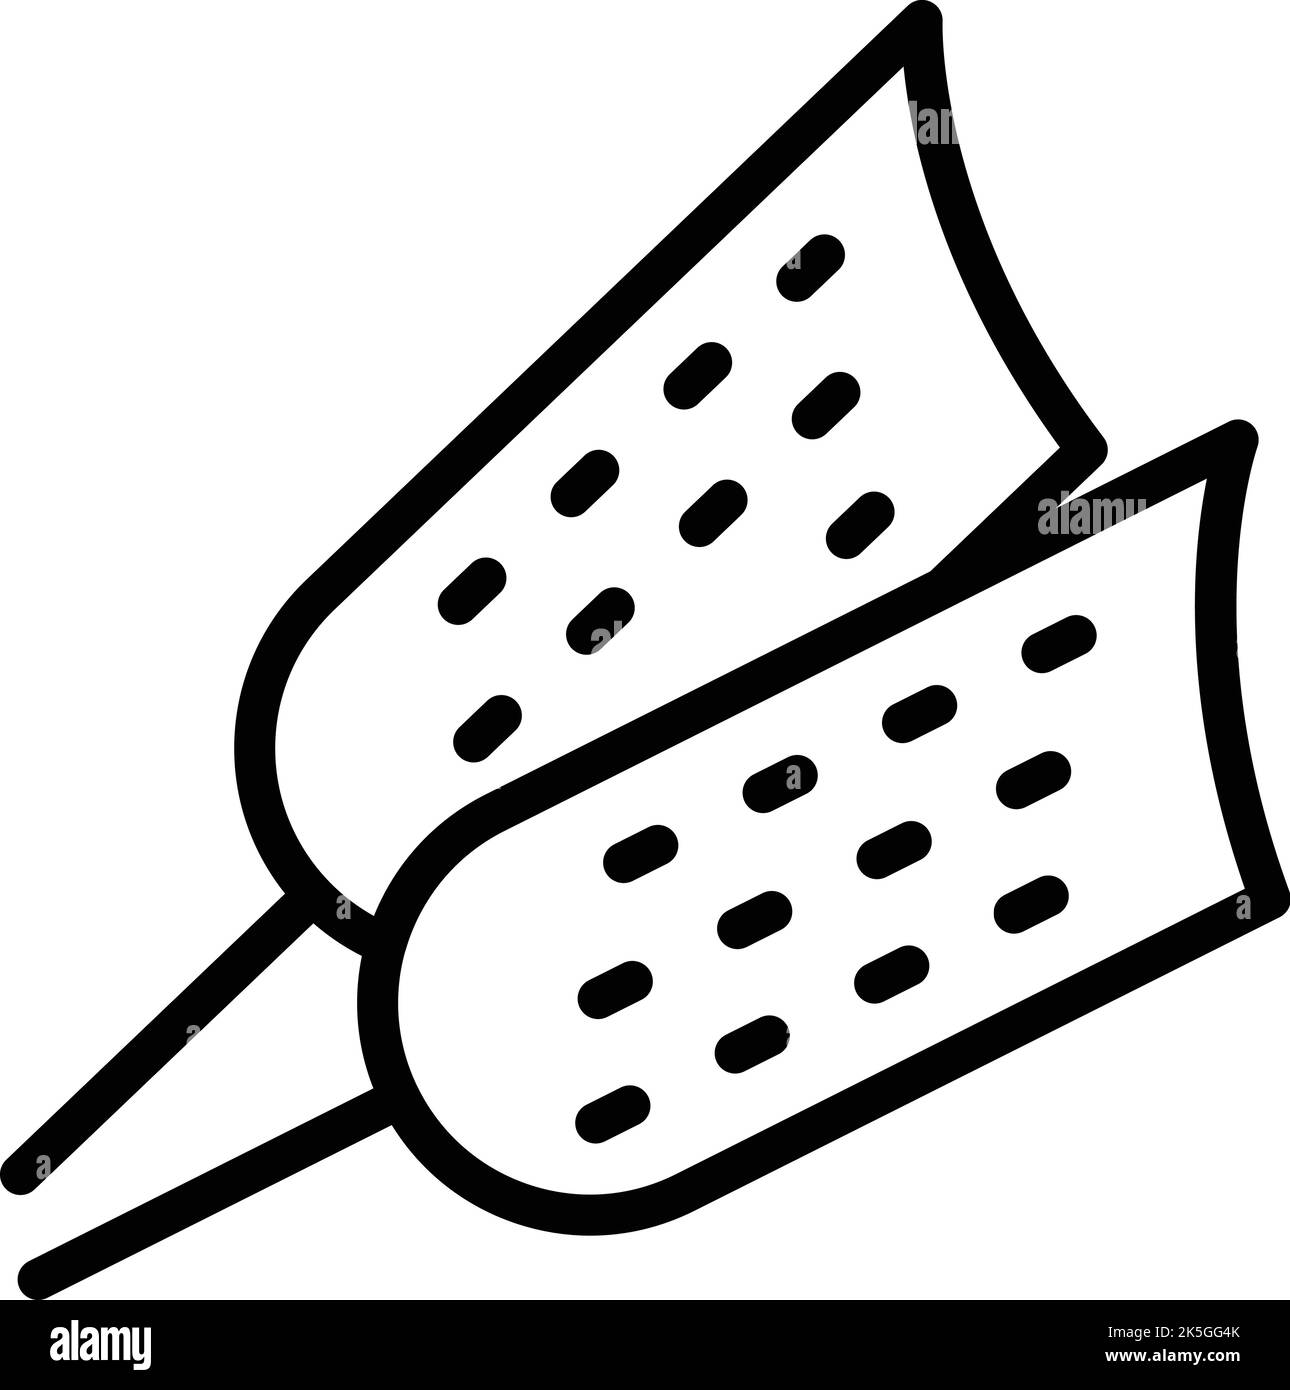 Korea corn dog icon outline vector. Corndog stick. Sauce fried Stock Vector